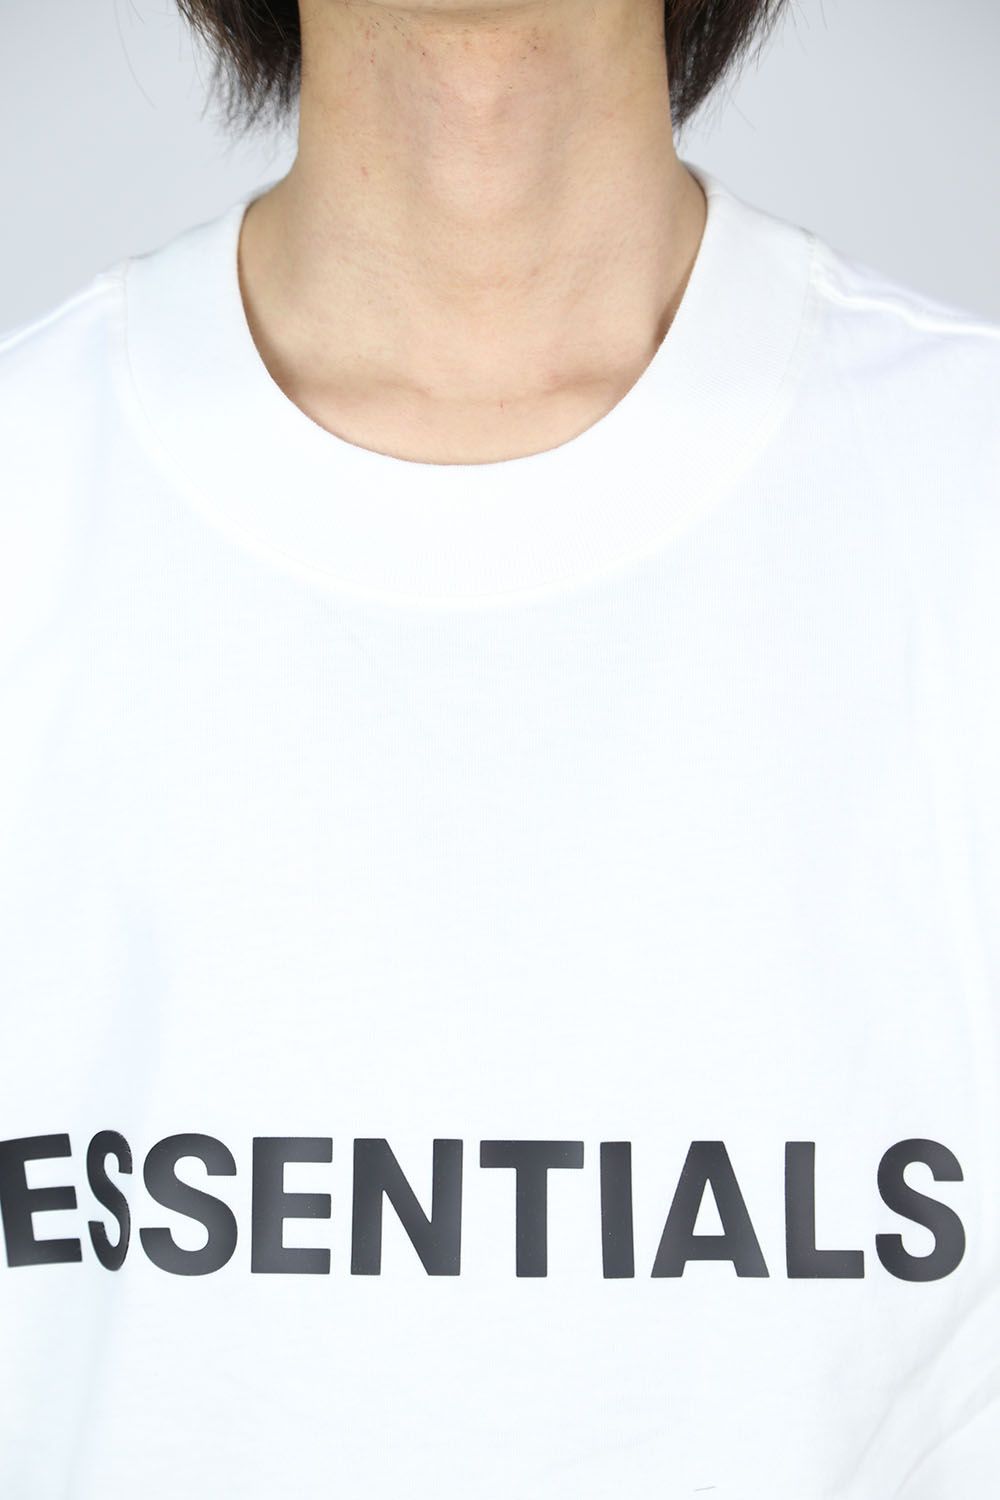 FOG ESSENTIALS フロントロゴ Tシャツ ホワイト Sサイズ